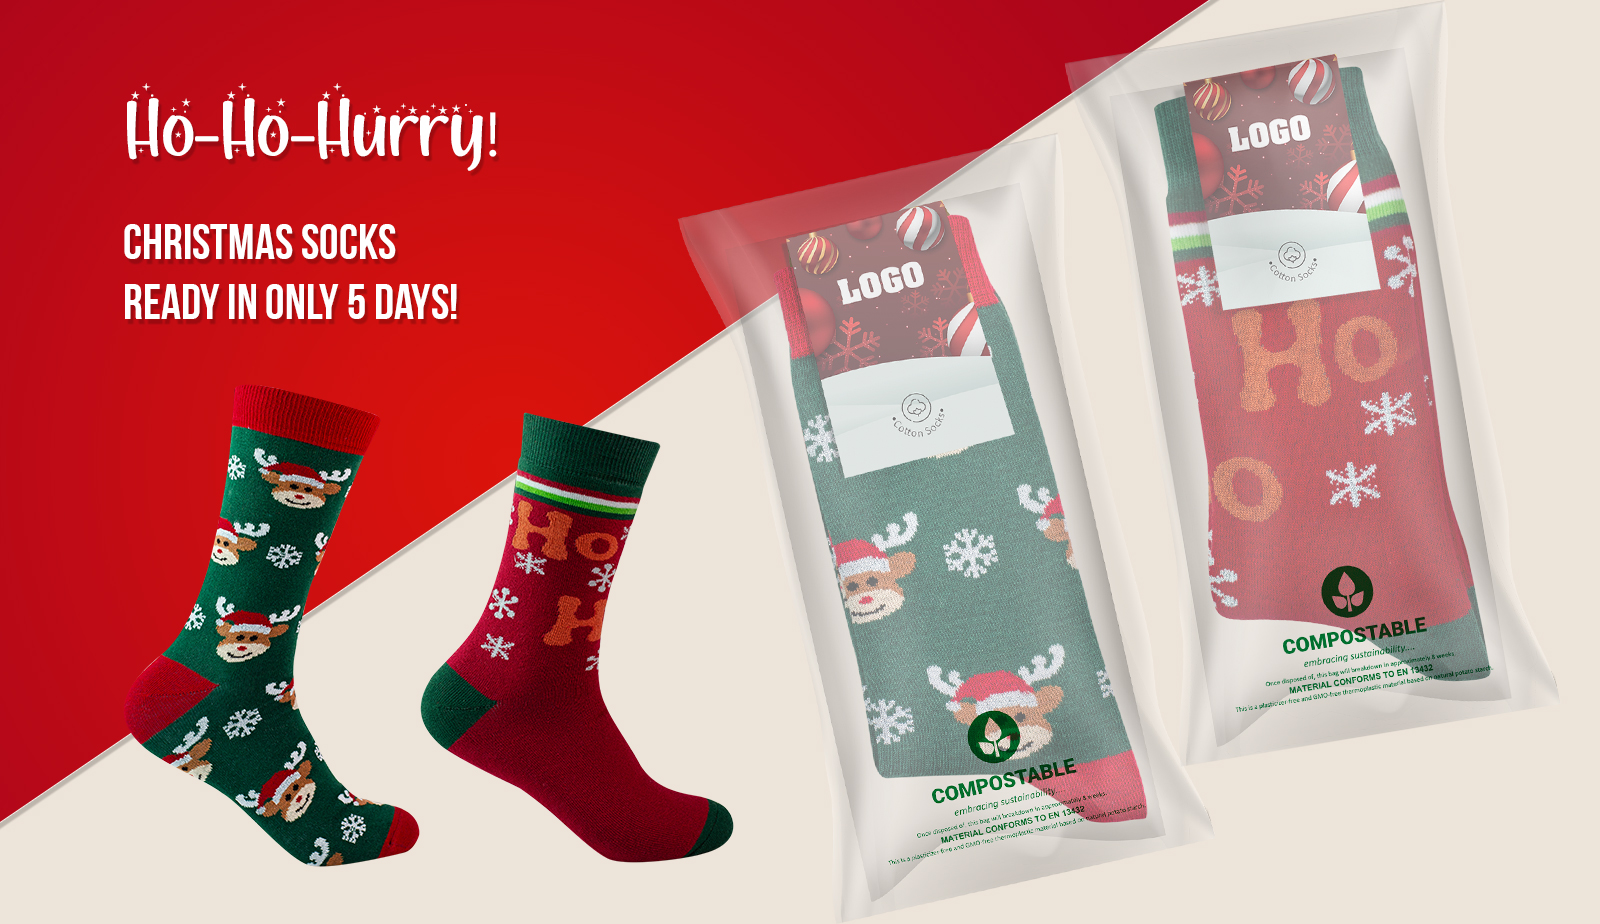 Christmas socks in 5 days!